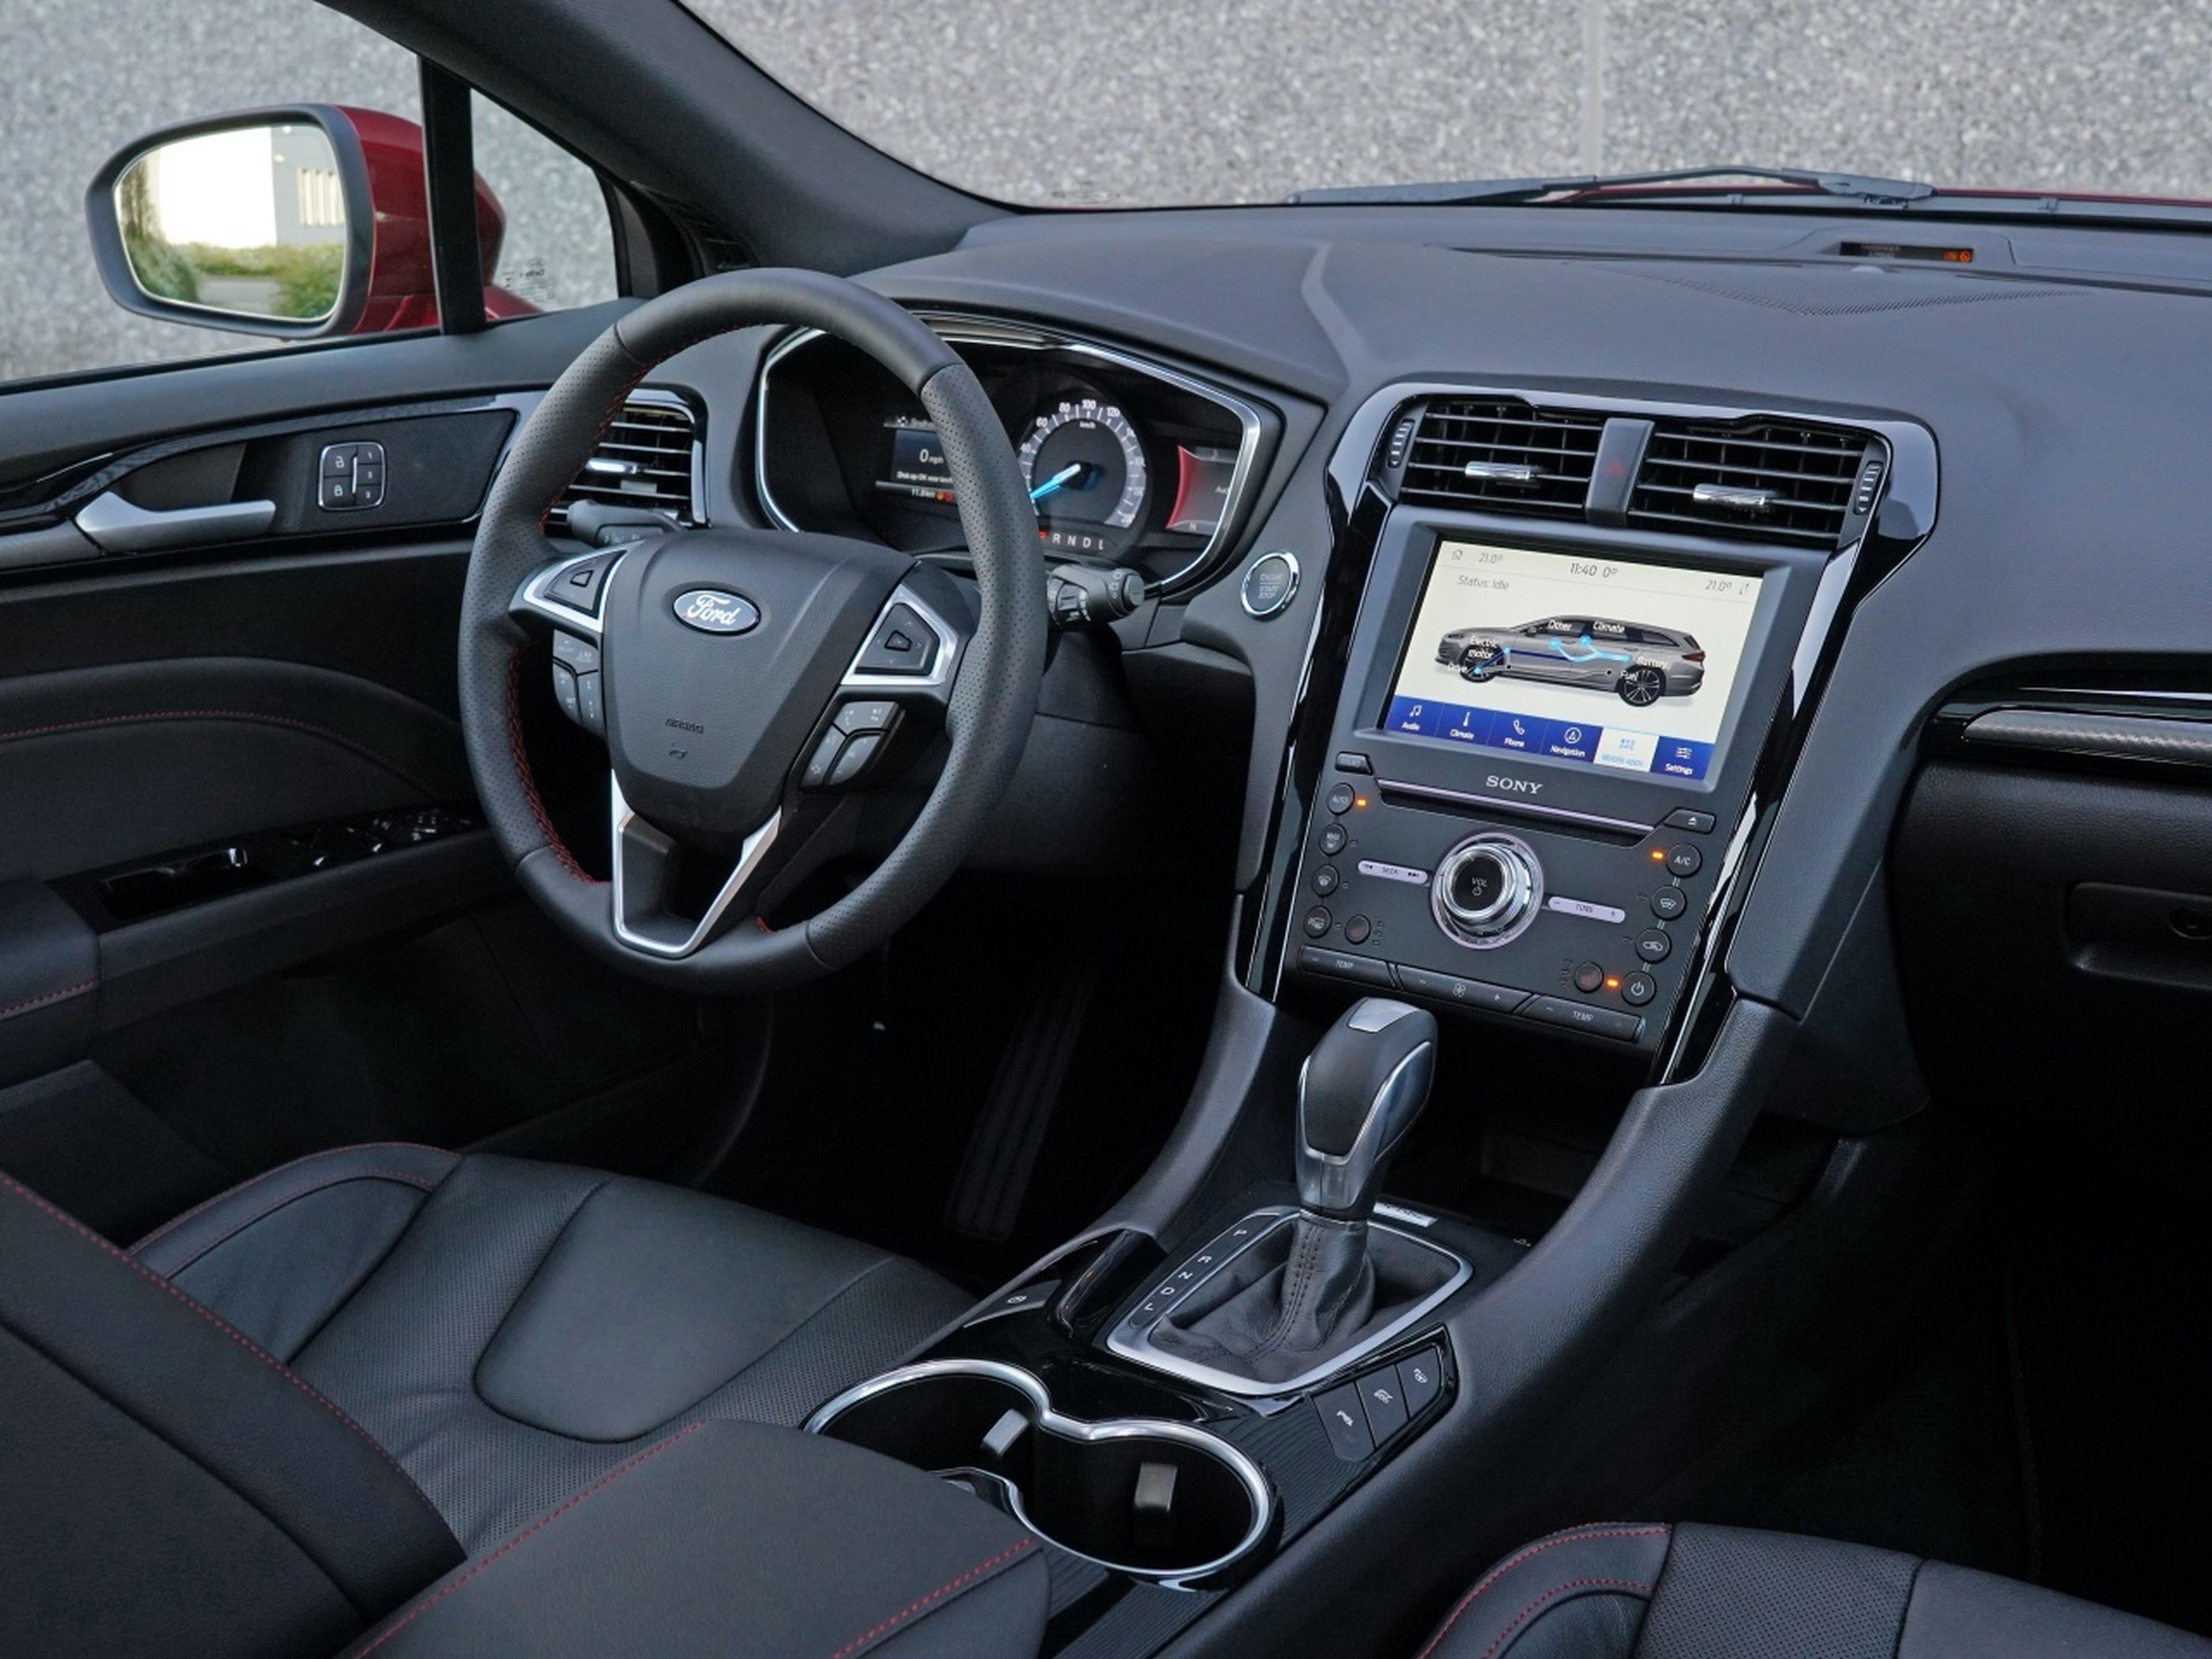 Ford Mondeo Sportbreak interior